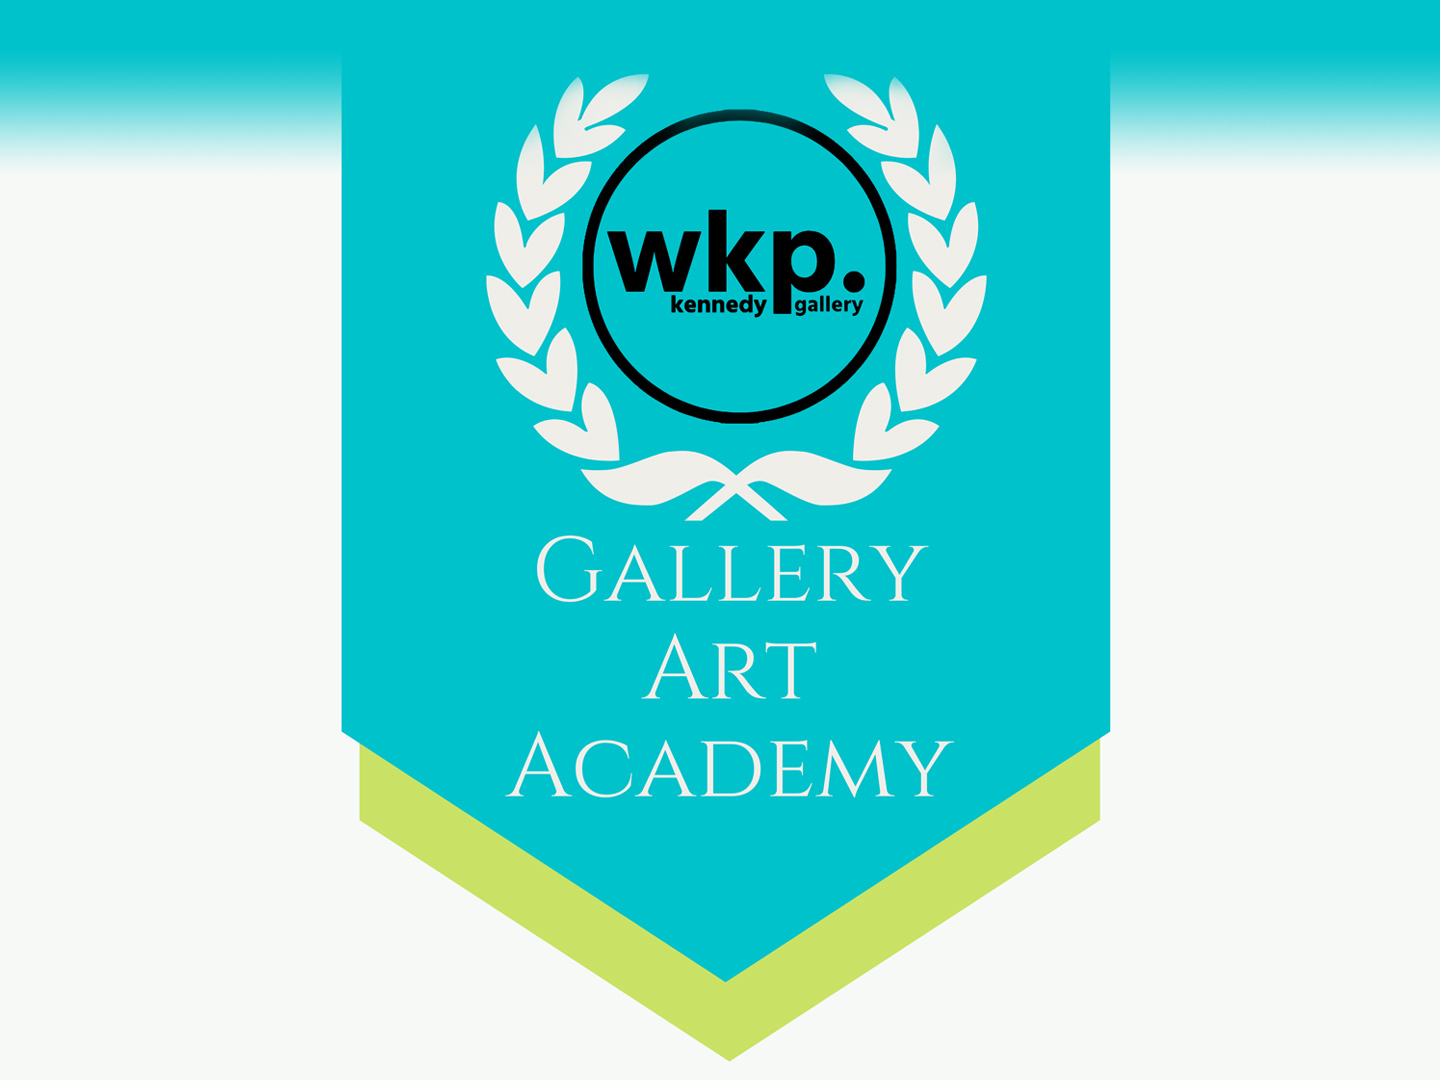 Gallery Art Academy